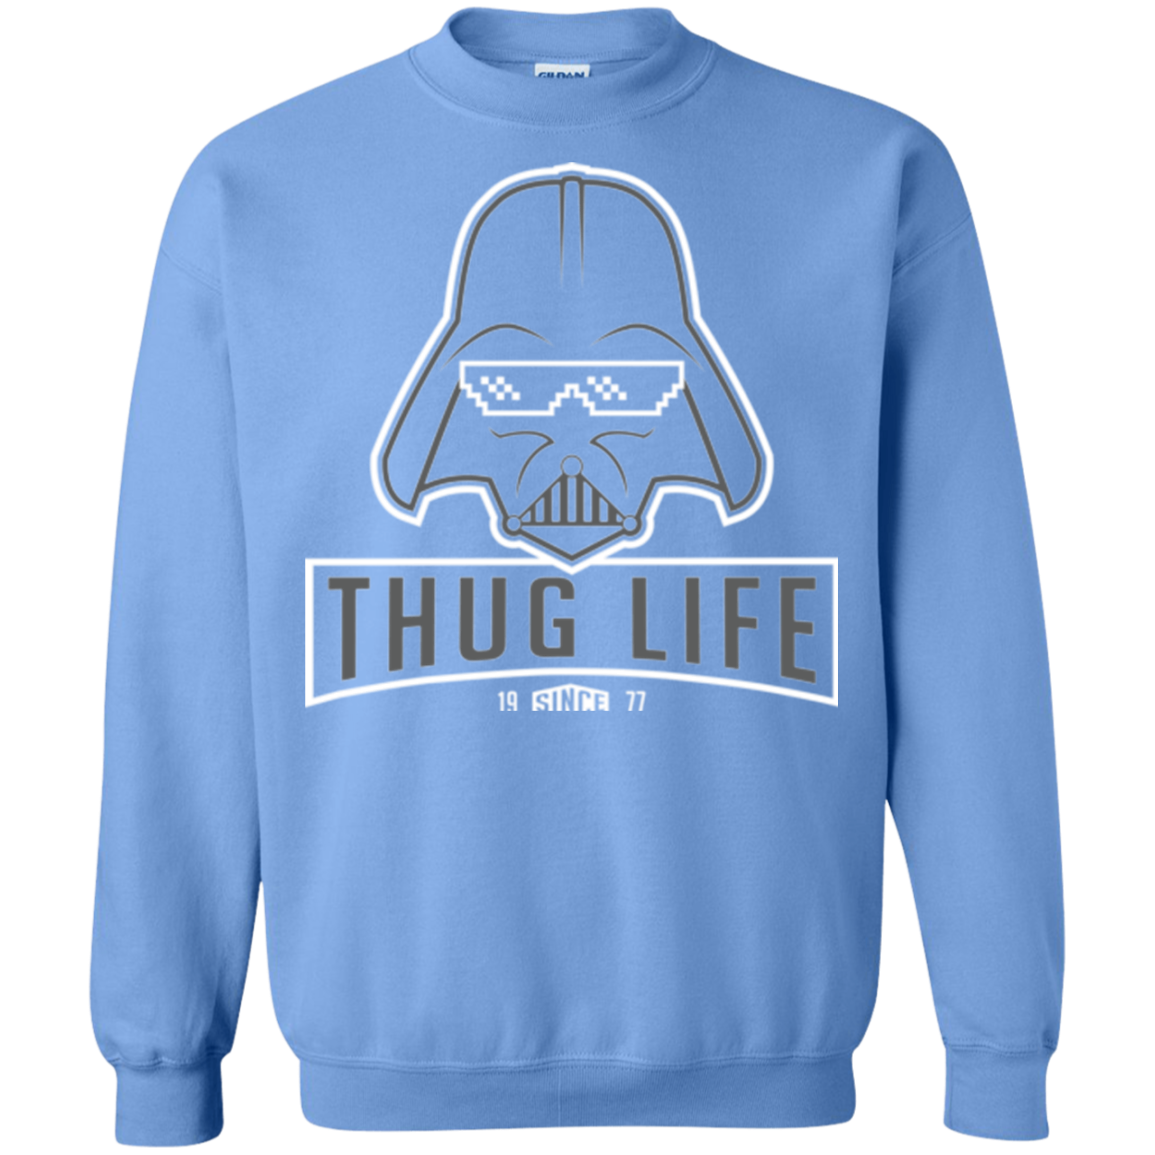 My Life (1) Crewneck Sweatshirt